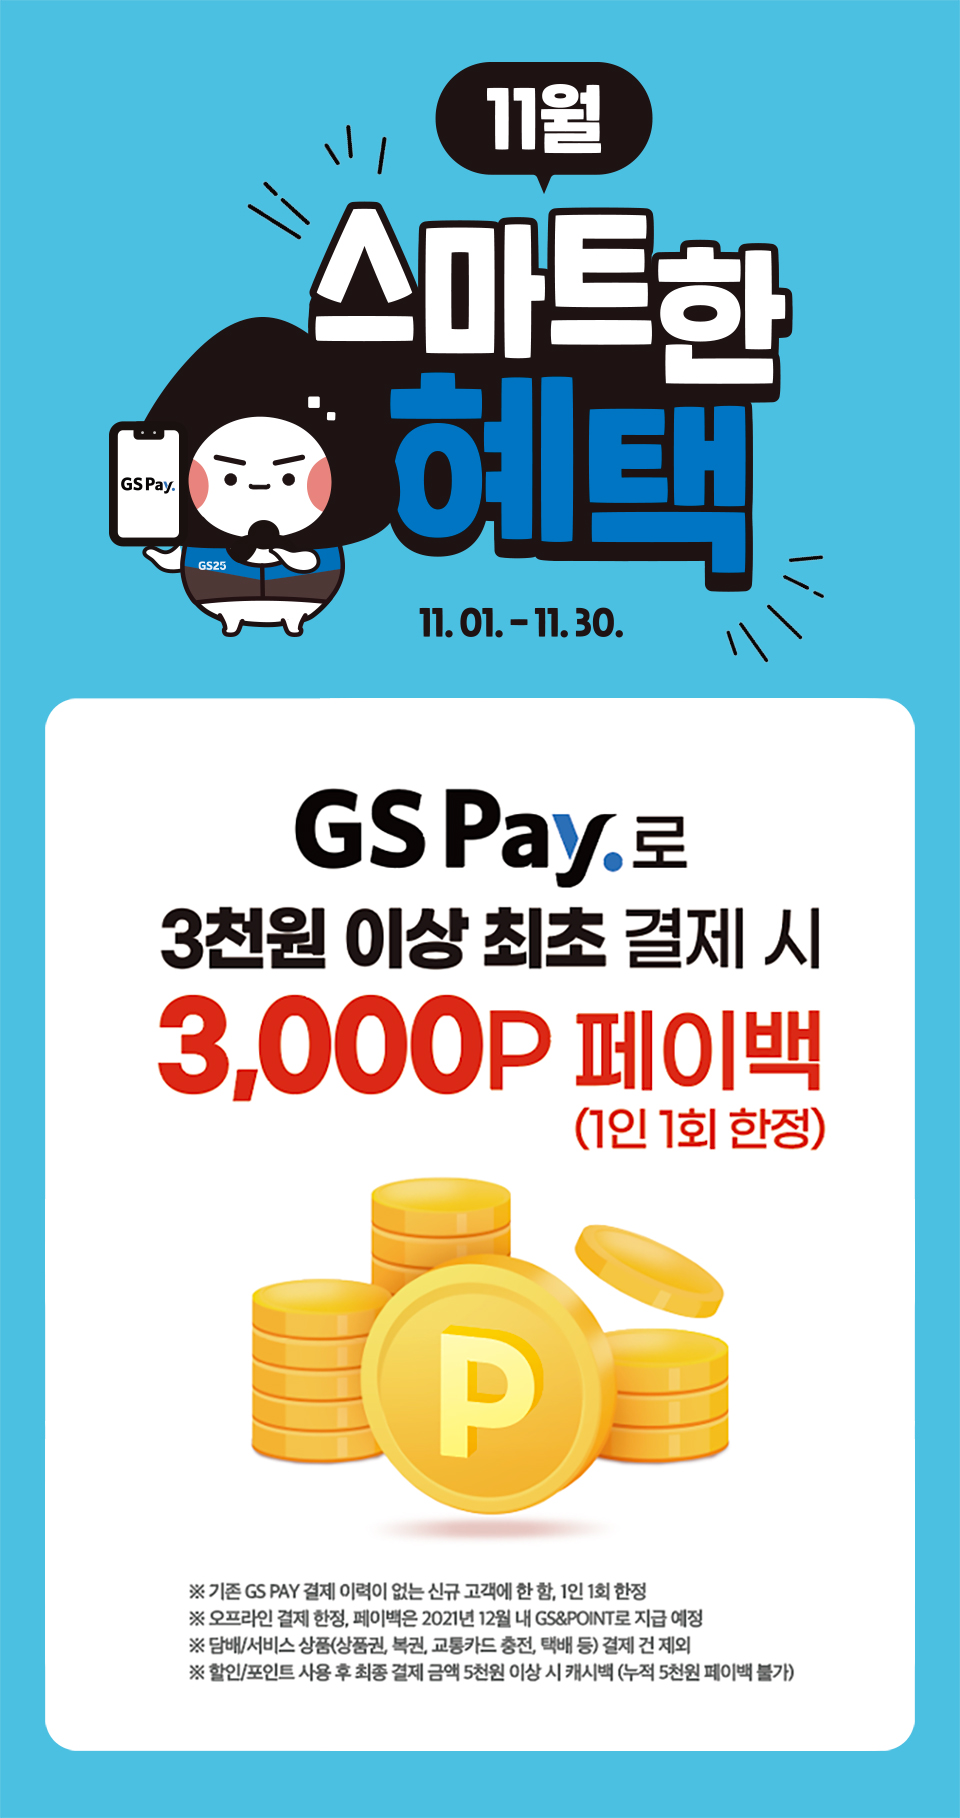 GS Pay 3천원 이상 최대 결제 시 3,000P 페이백